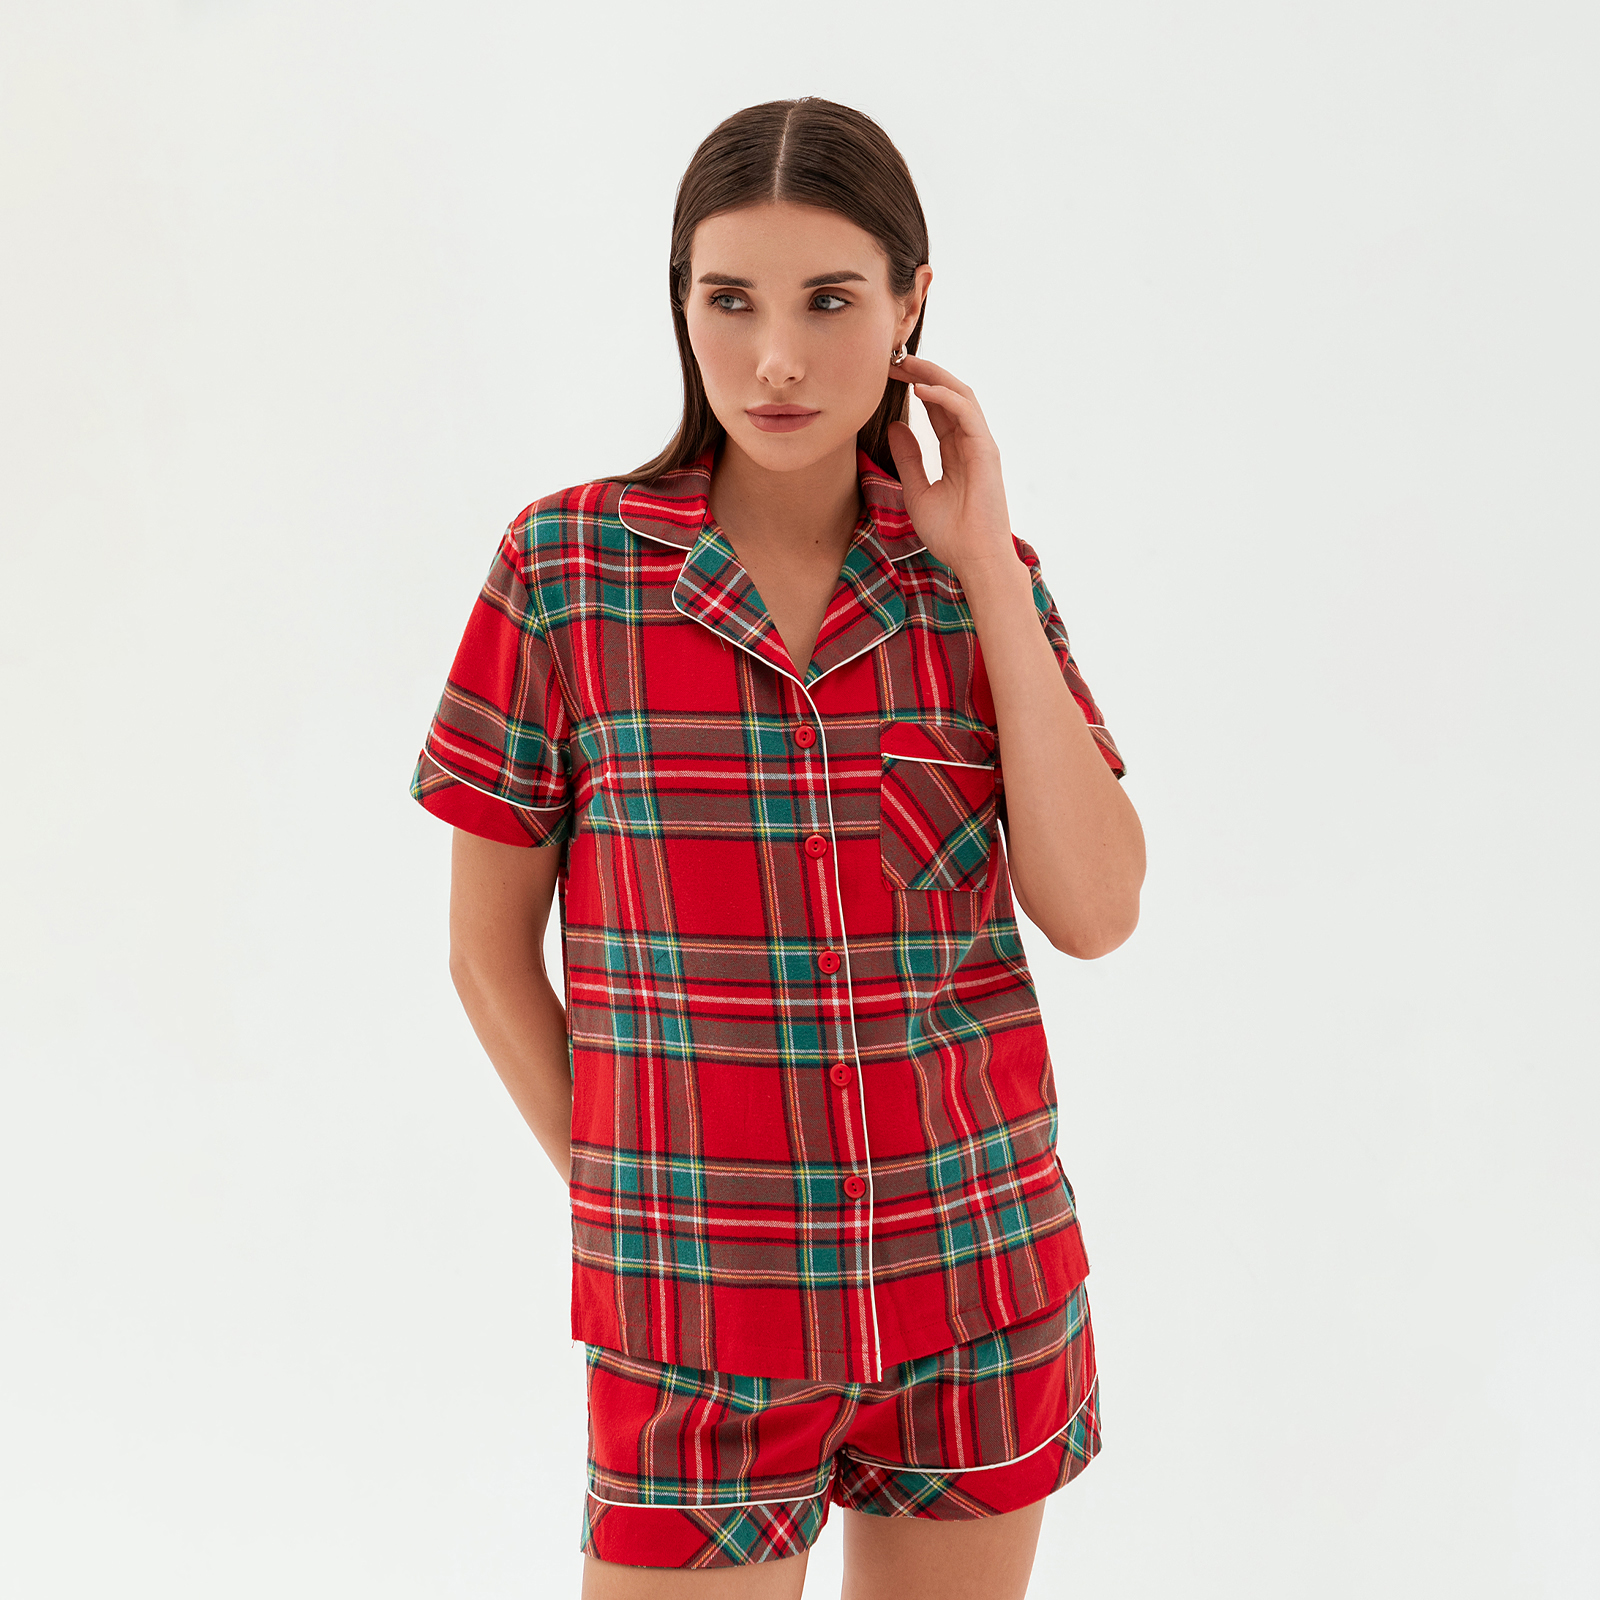 Пижама Gabbia rossa II жен пижама с шортами арт 23 0098 красный р 50